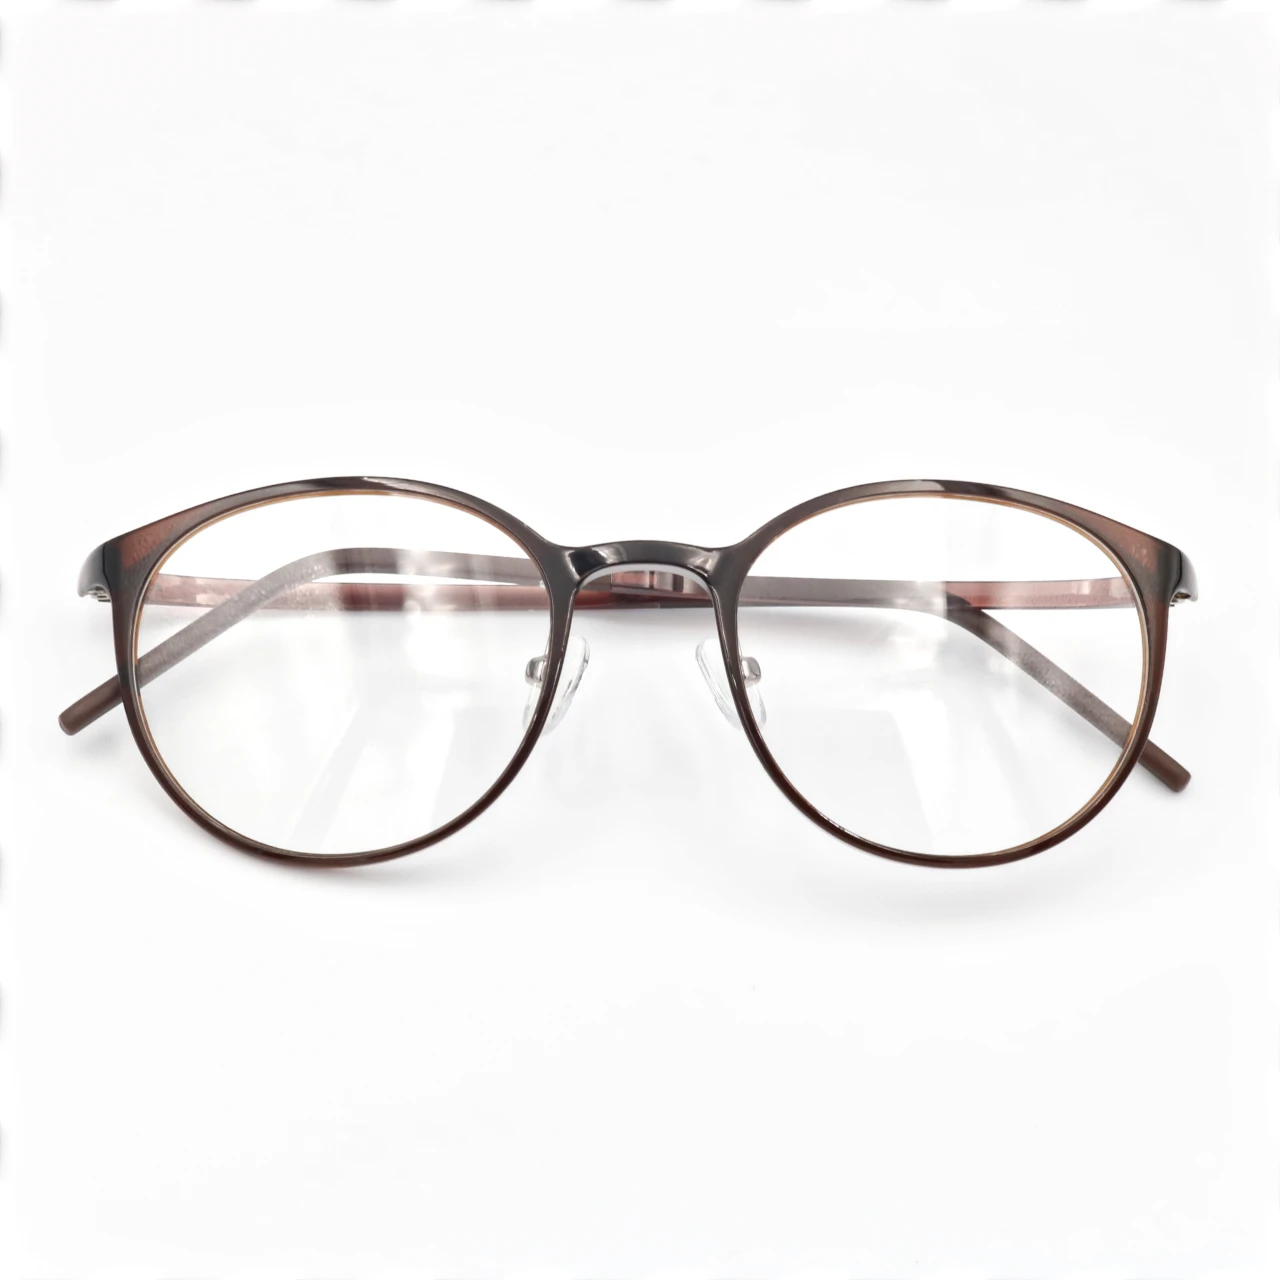 100% Made In Korea Oem/odm Glasses Ultem Frame High-quality - Buy ...